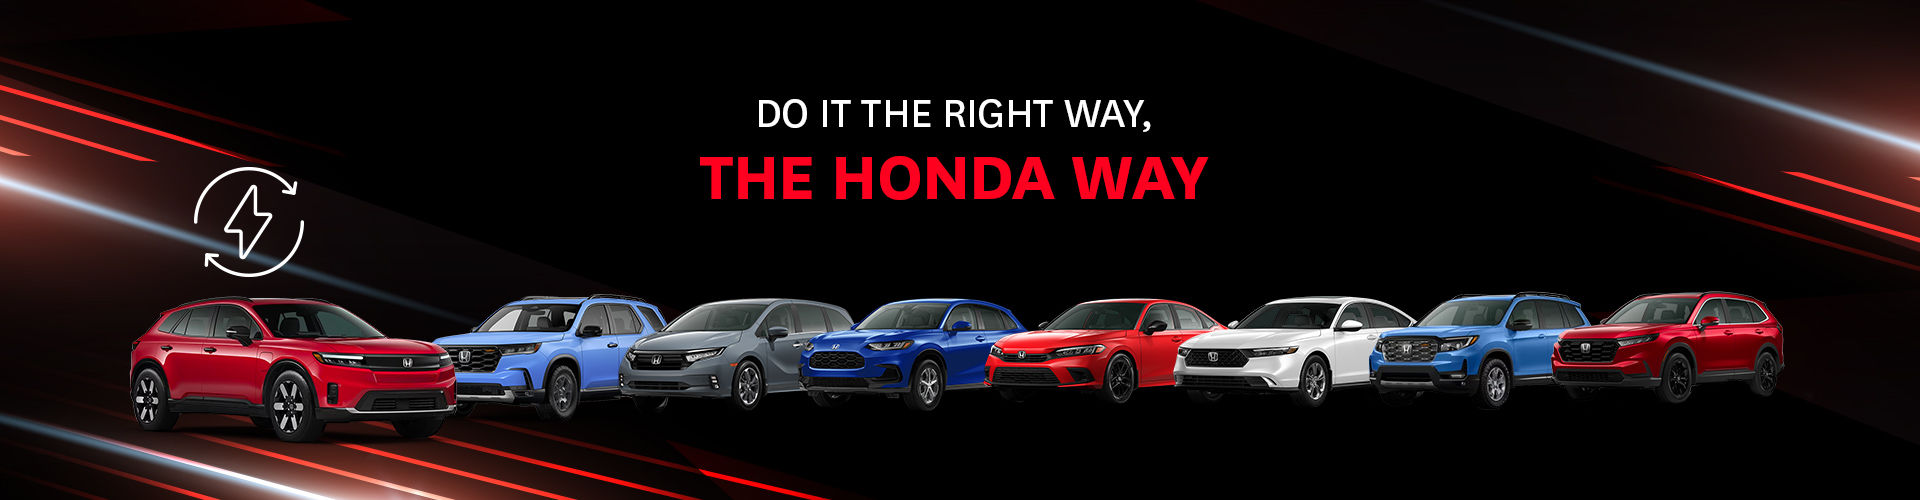 The Honda Way